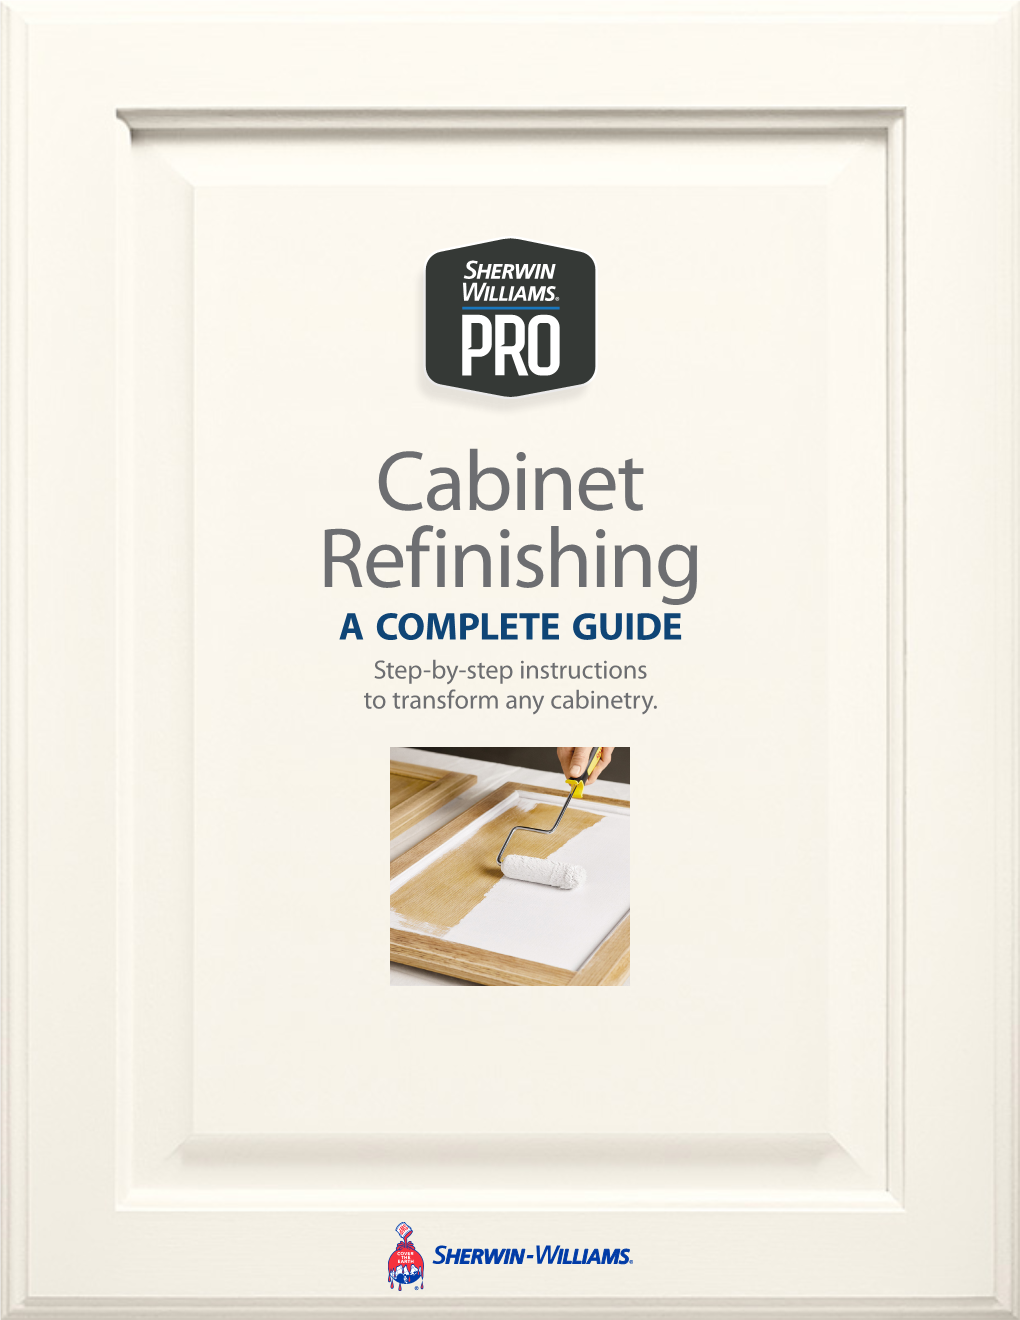 Sherwin-Williams PRO Cabinet Refinishing Guide